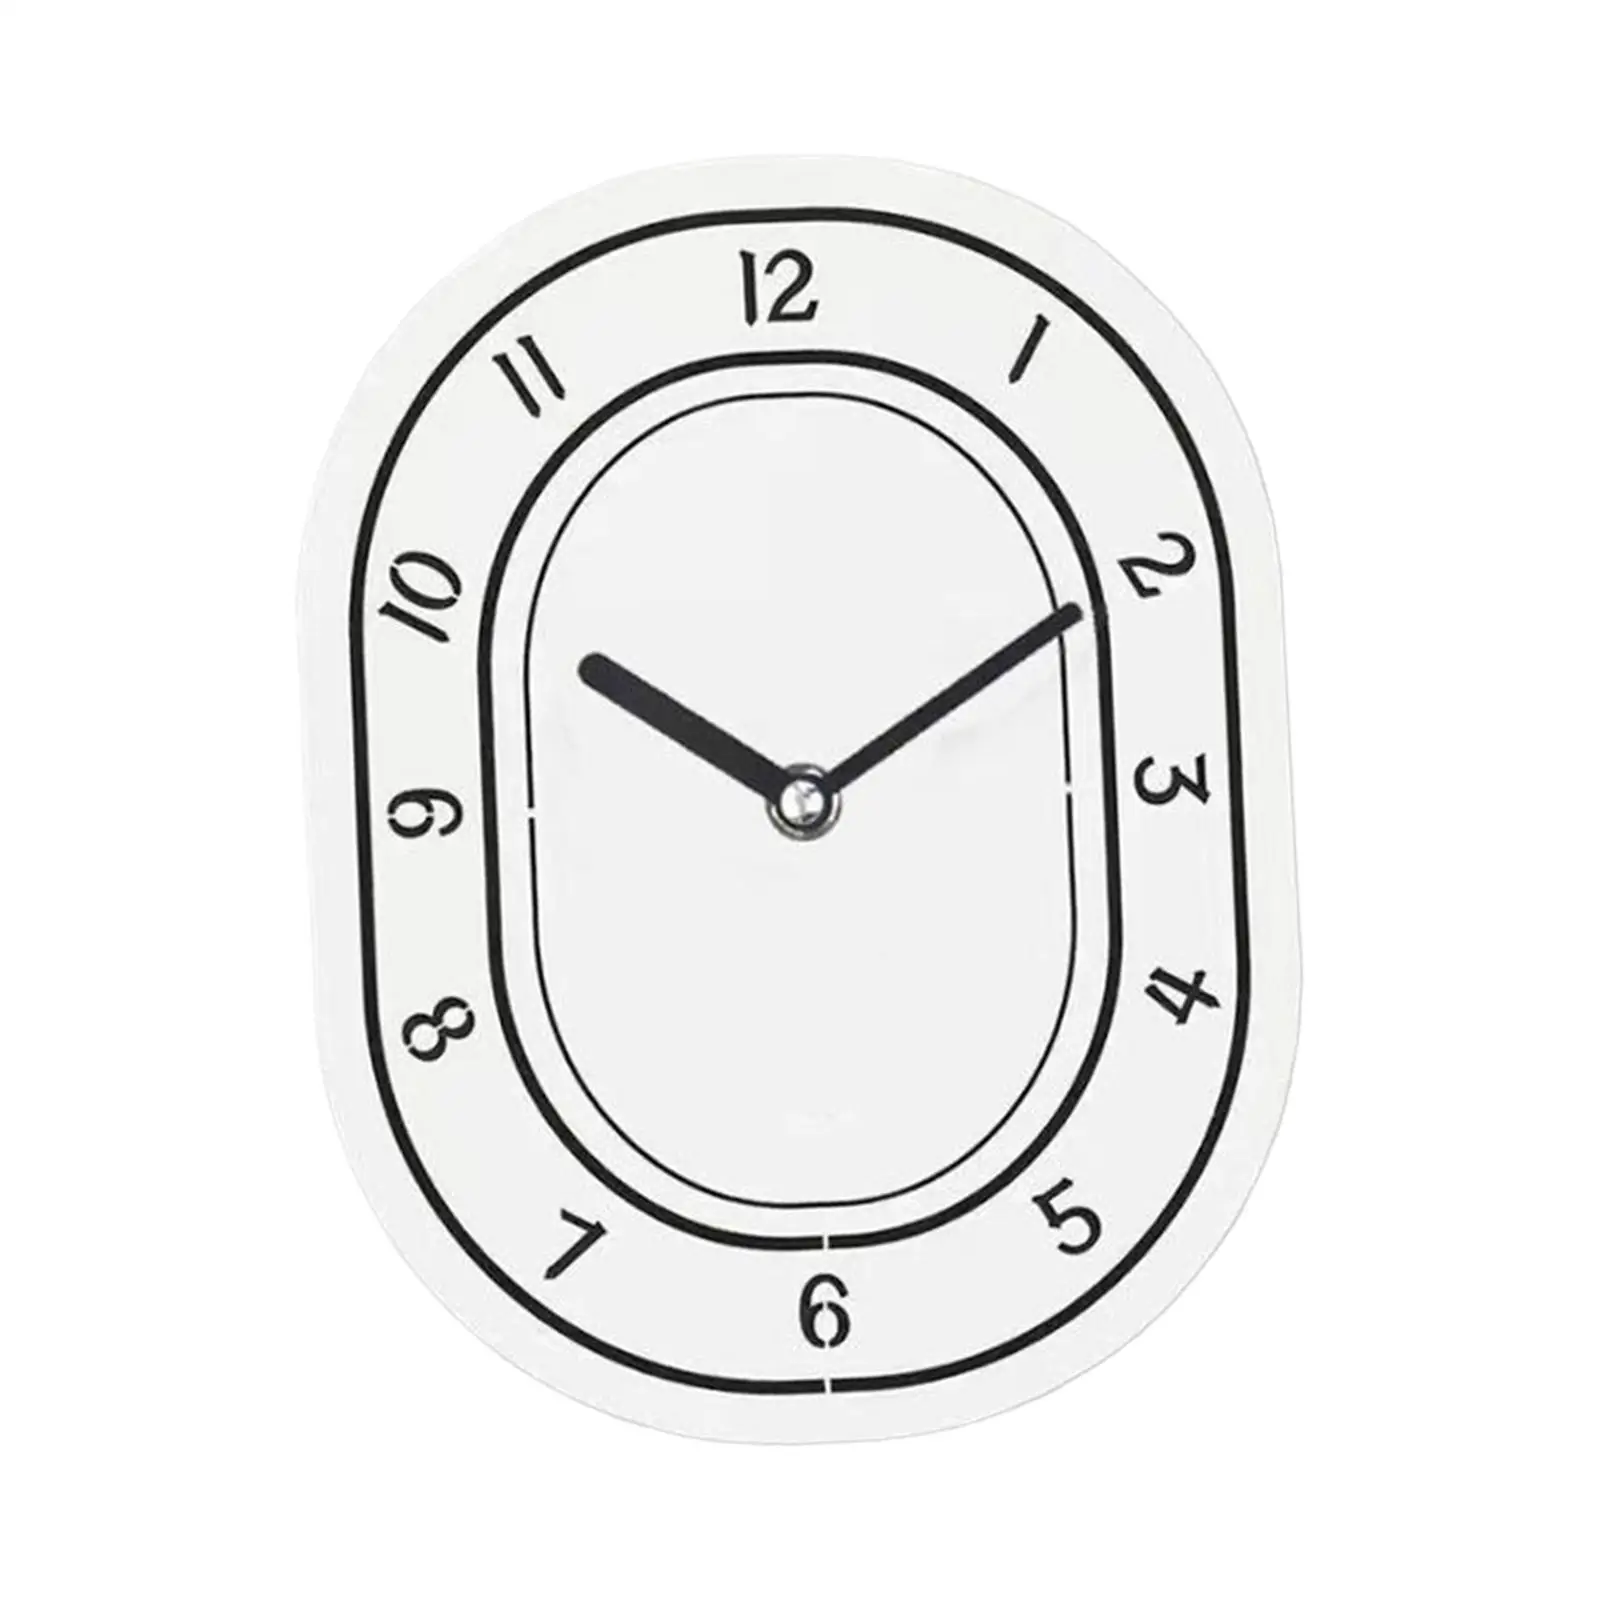 Oval Wall Clock, Wall Hanging Clock Accessories Minimalist Stylish Wall Clock, Decorative Clock for Bedroom, Bathroom Kitchen